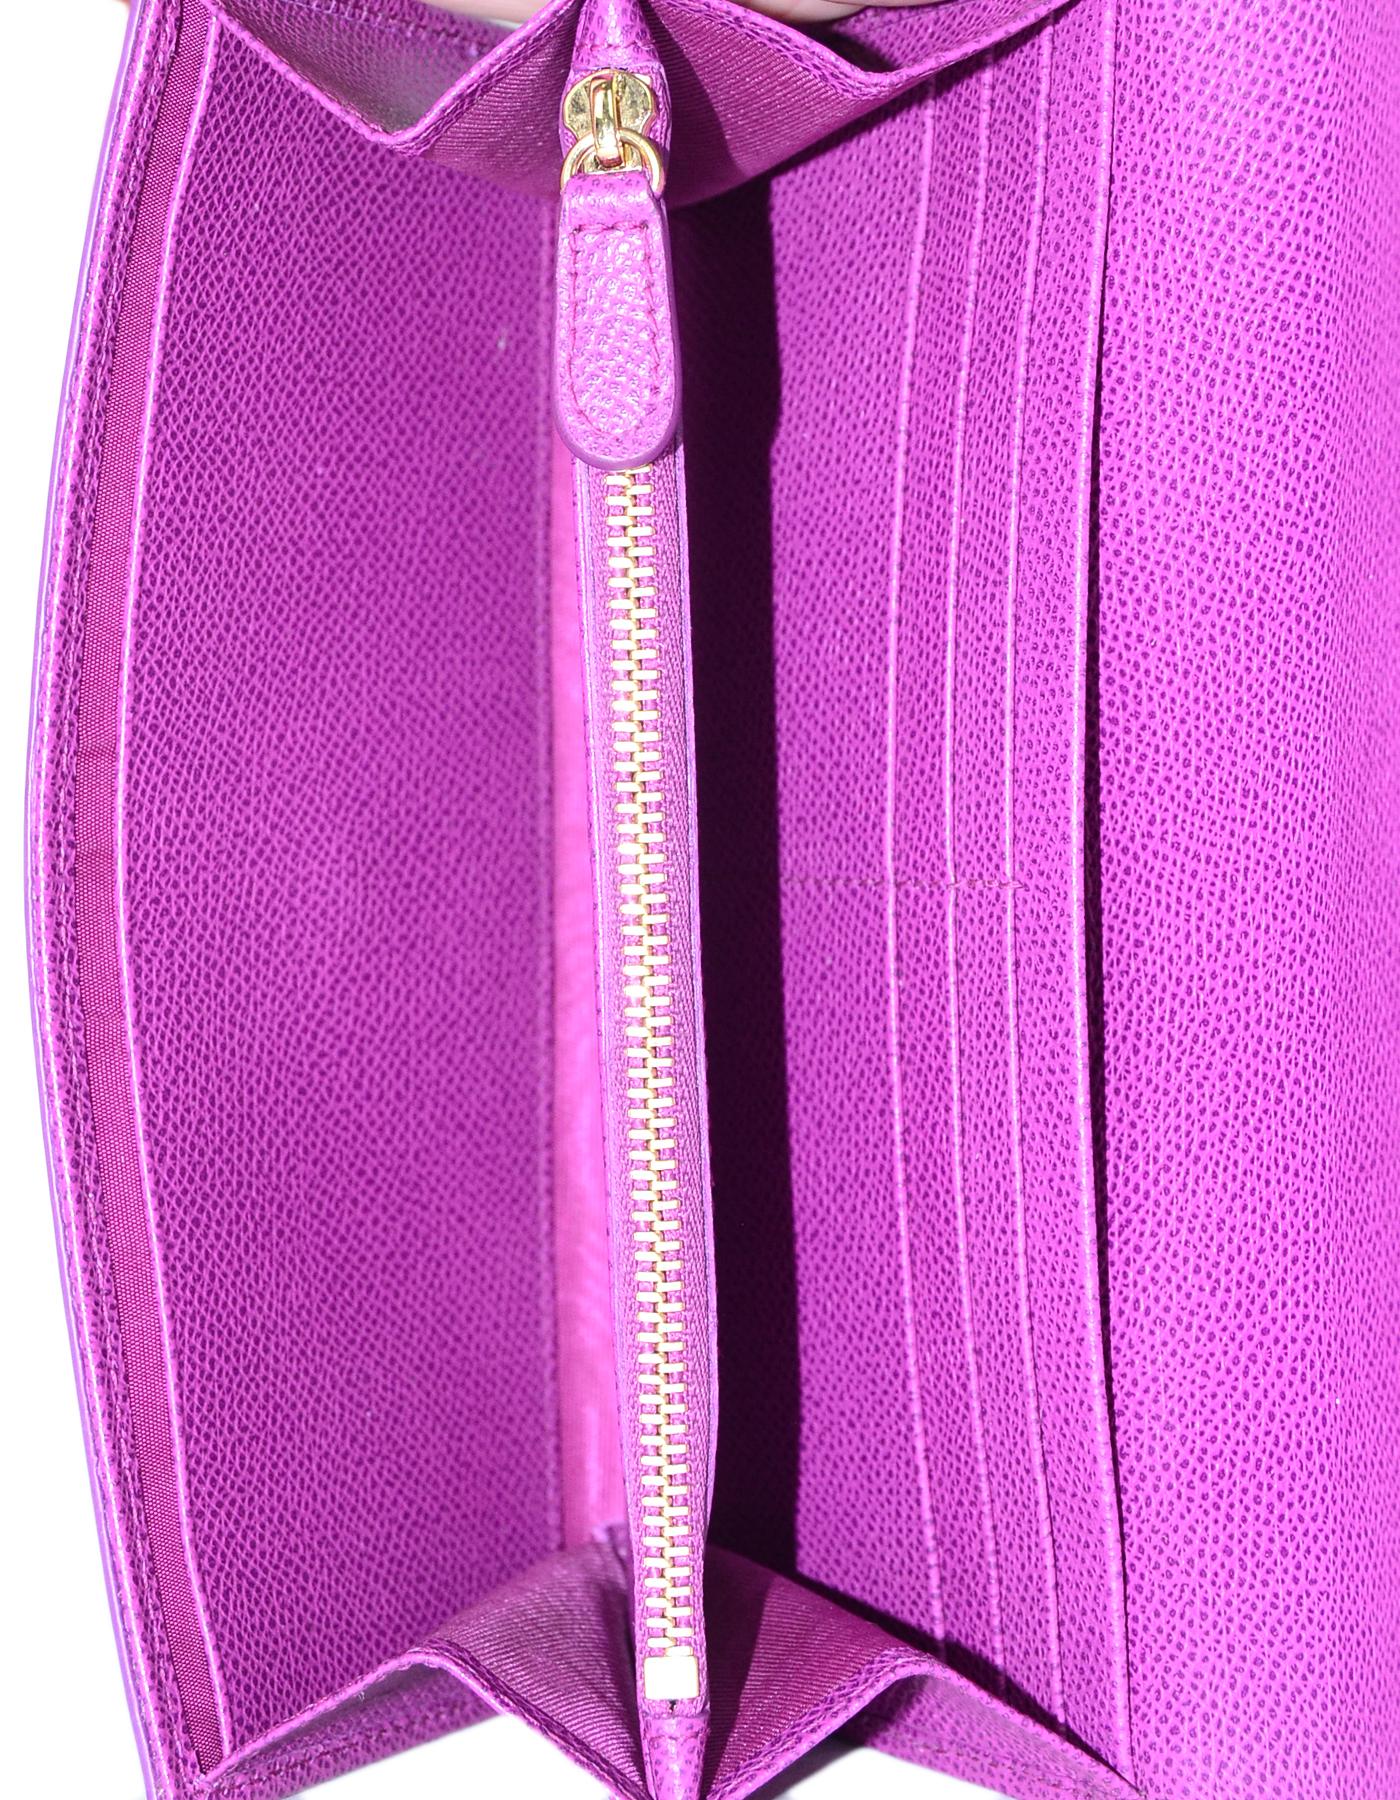 Women's Salvatore Ferragamo Purple Textured Leather Vera Bow Wallet rt. $490